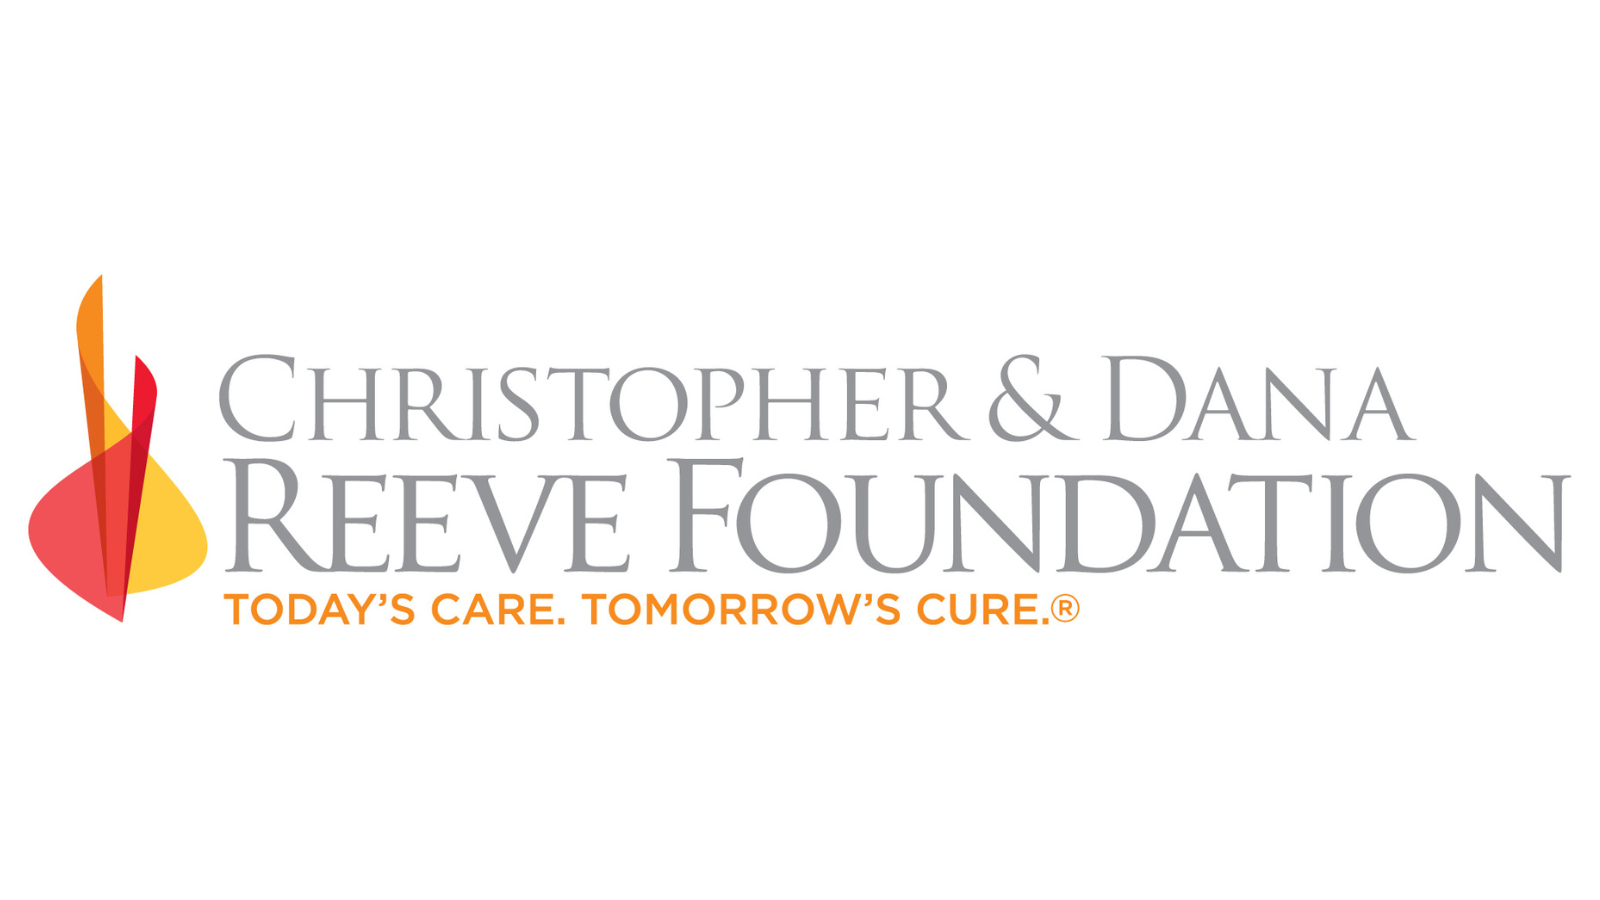 Christopher & Dana Reeve Foundation Logo